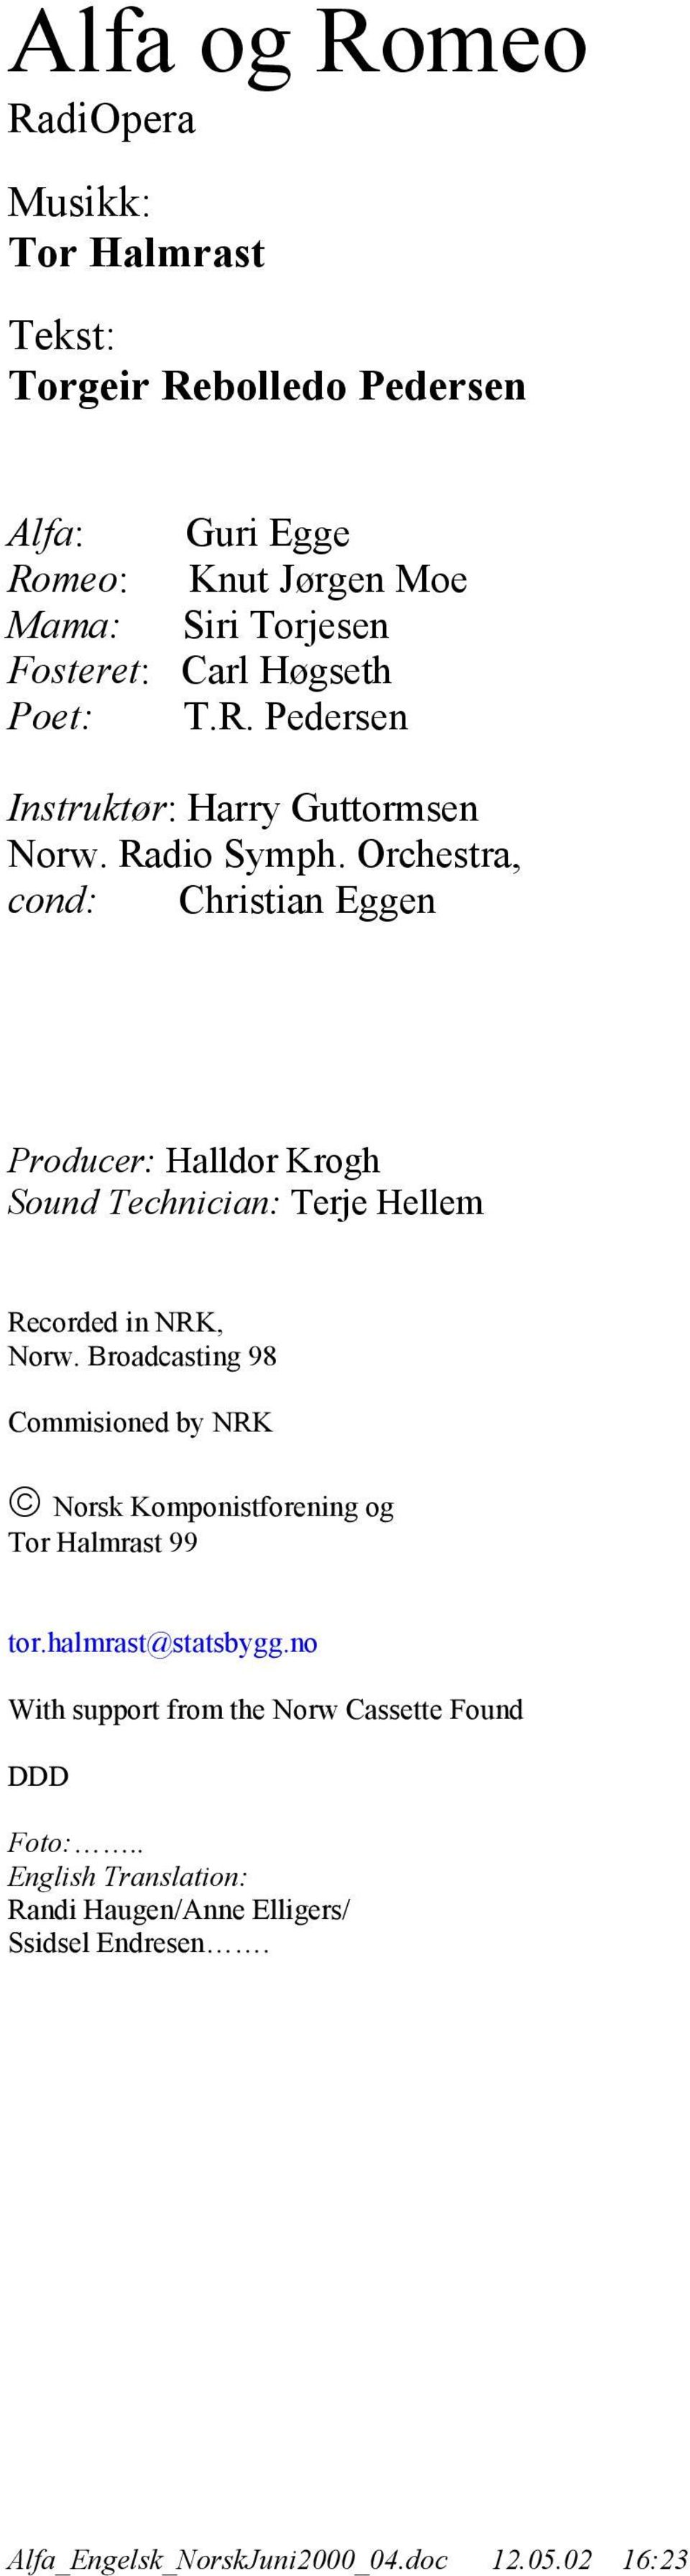 Orchestra, cond: Christian Eggen Producer: Halldor Krogh Sound Technician: Terje Hellem Recorded in NRK, Norw.